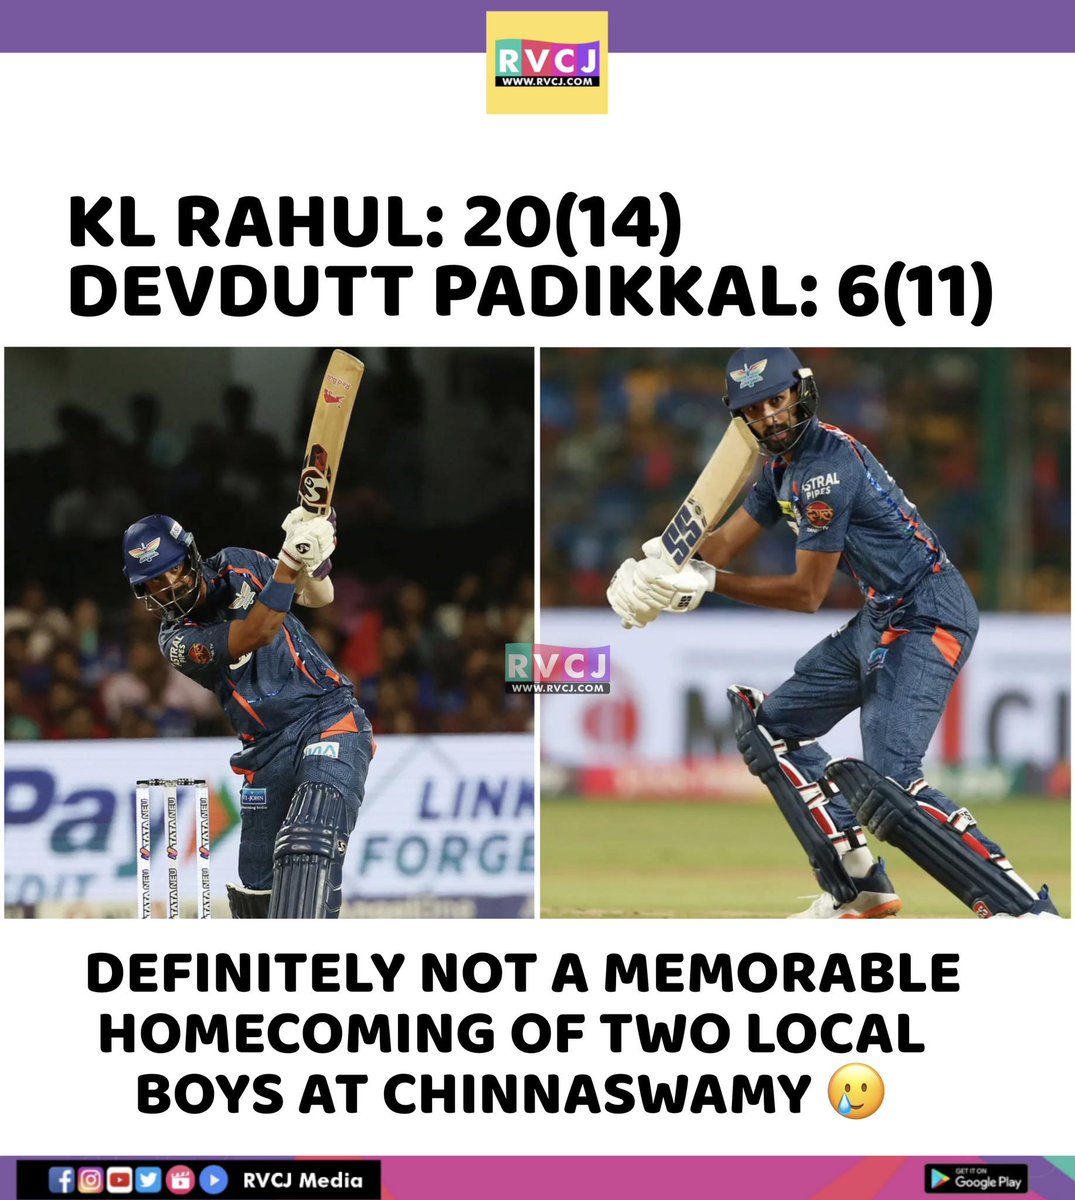 Kl Rahul and devdutt padikkal
#klrahul #devduttpadikkal❤️